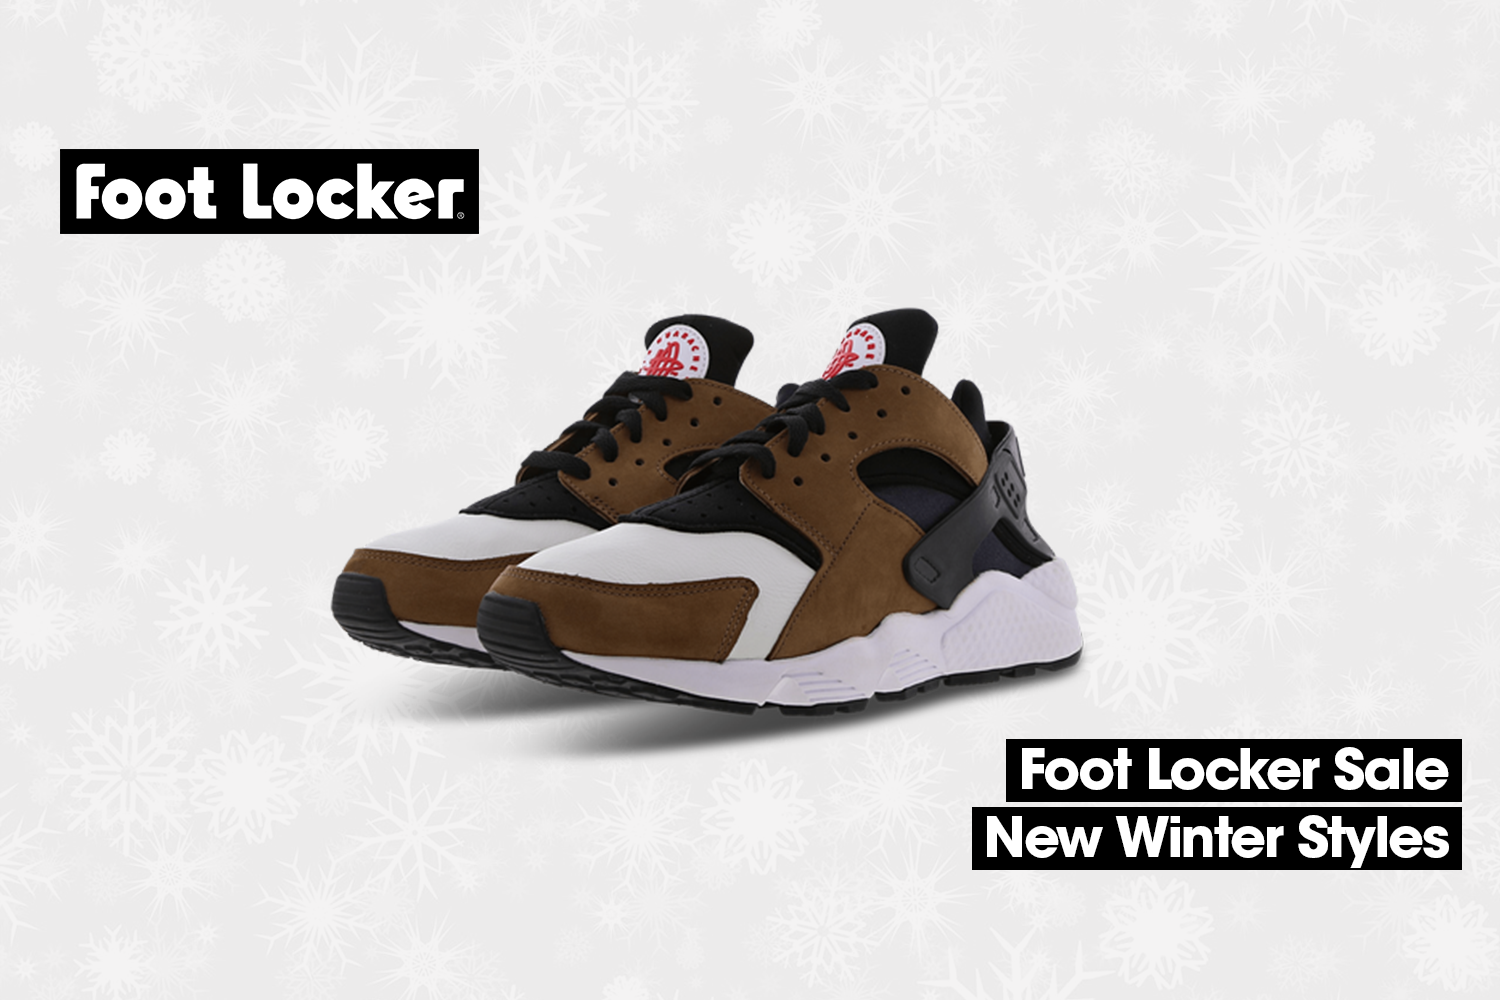 Foot Locker voegt Nike items toe aan de Winter sale